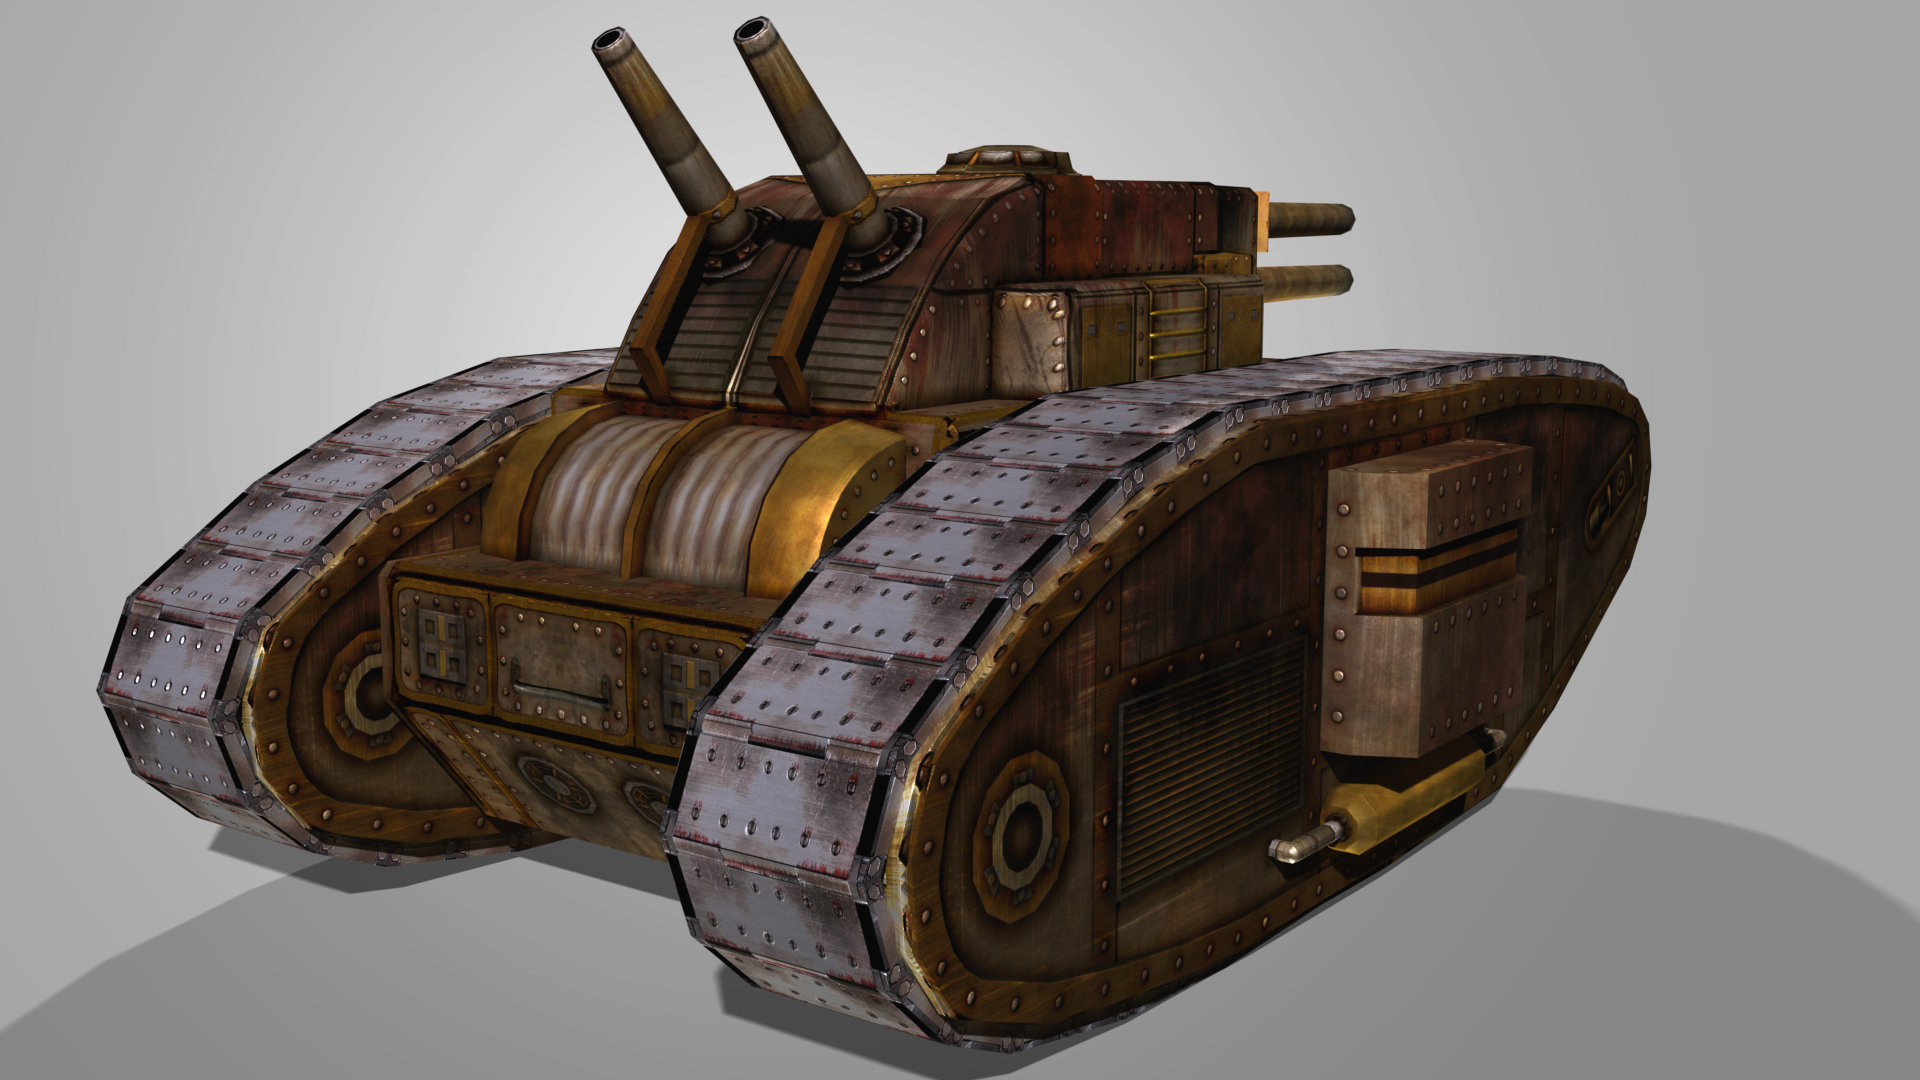 Tanky Tanks 2 on Steam